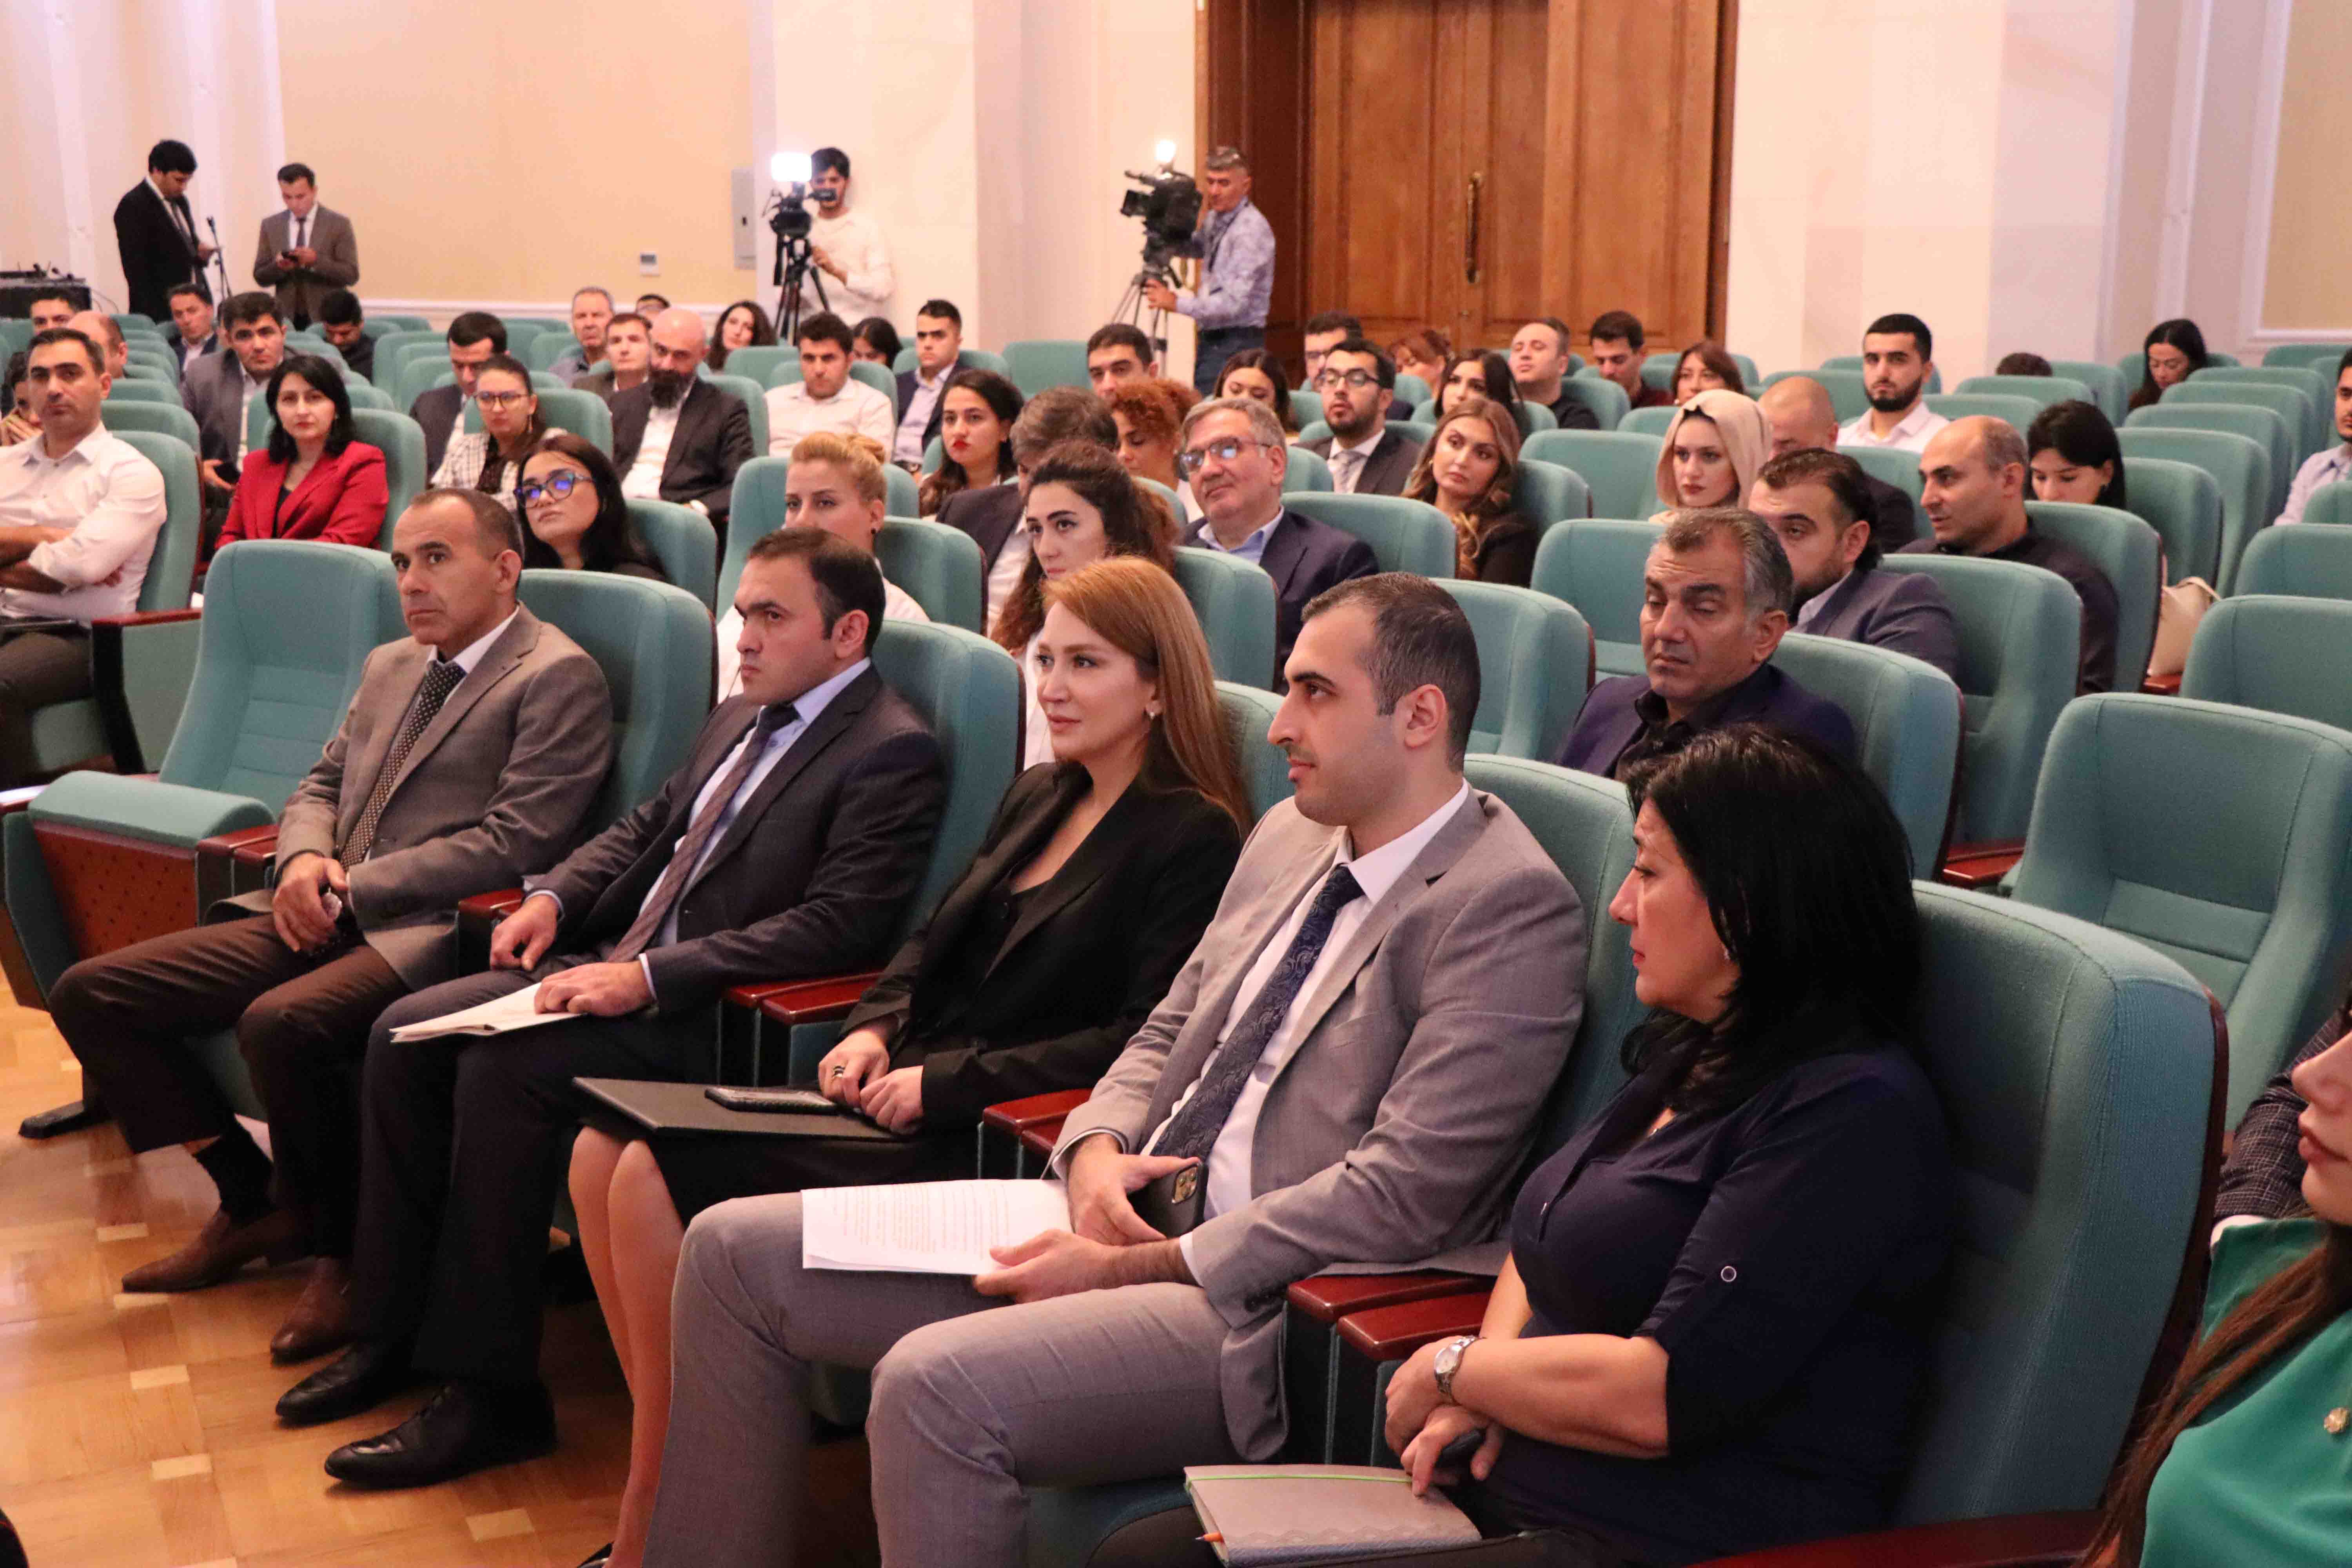 A seminar on advertisement legislation was held